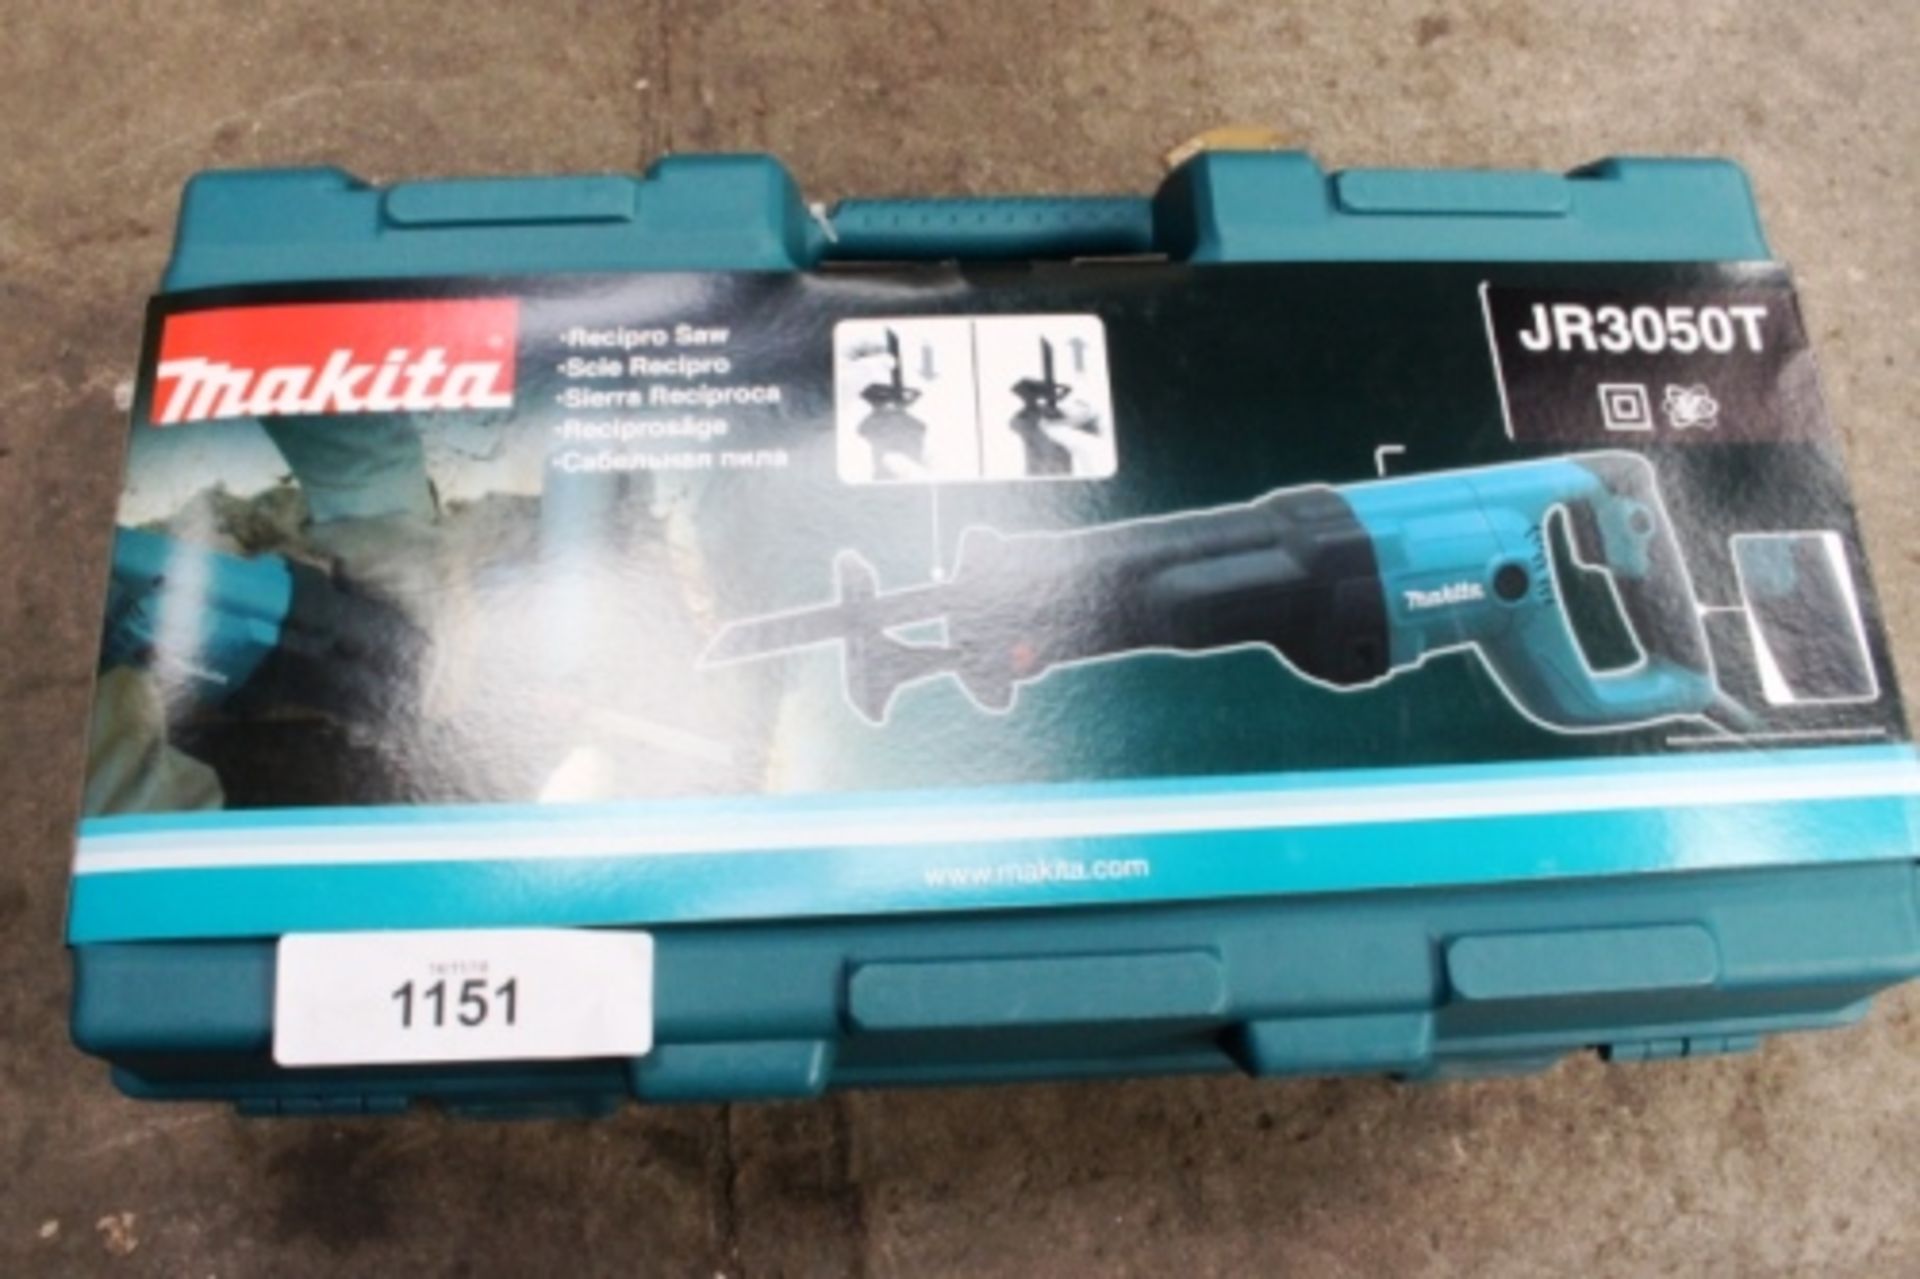 1 x Makita JR3050T, 220-240V reciprocating saw - Sealed new (TC3)